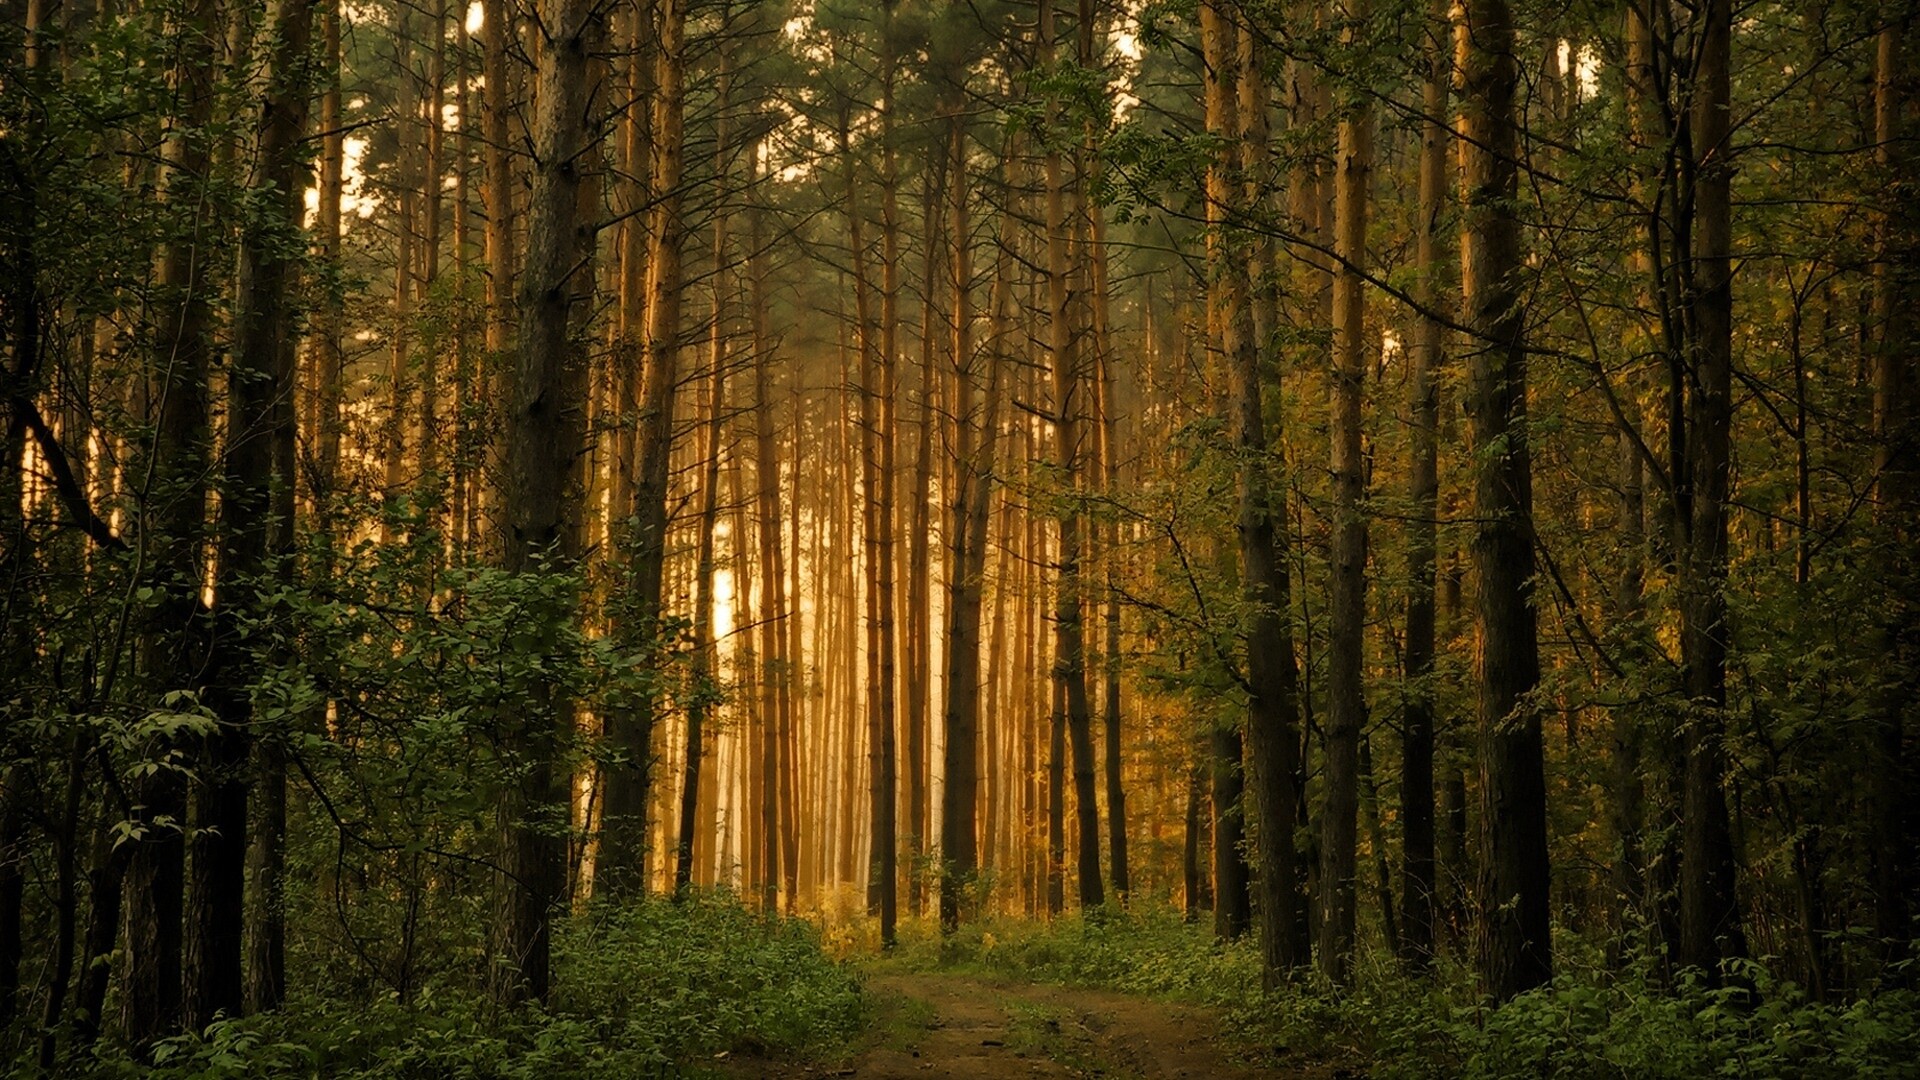 Forest: Nature’s most efficient ecosystem, Wildlife, Flora, Wilderness. 1920x1080 Full HD Background.